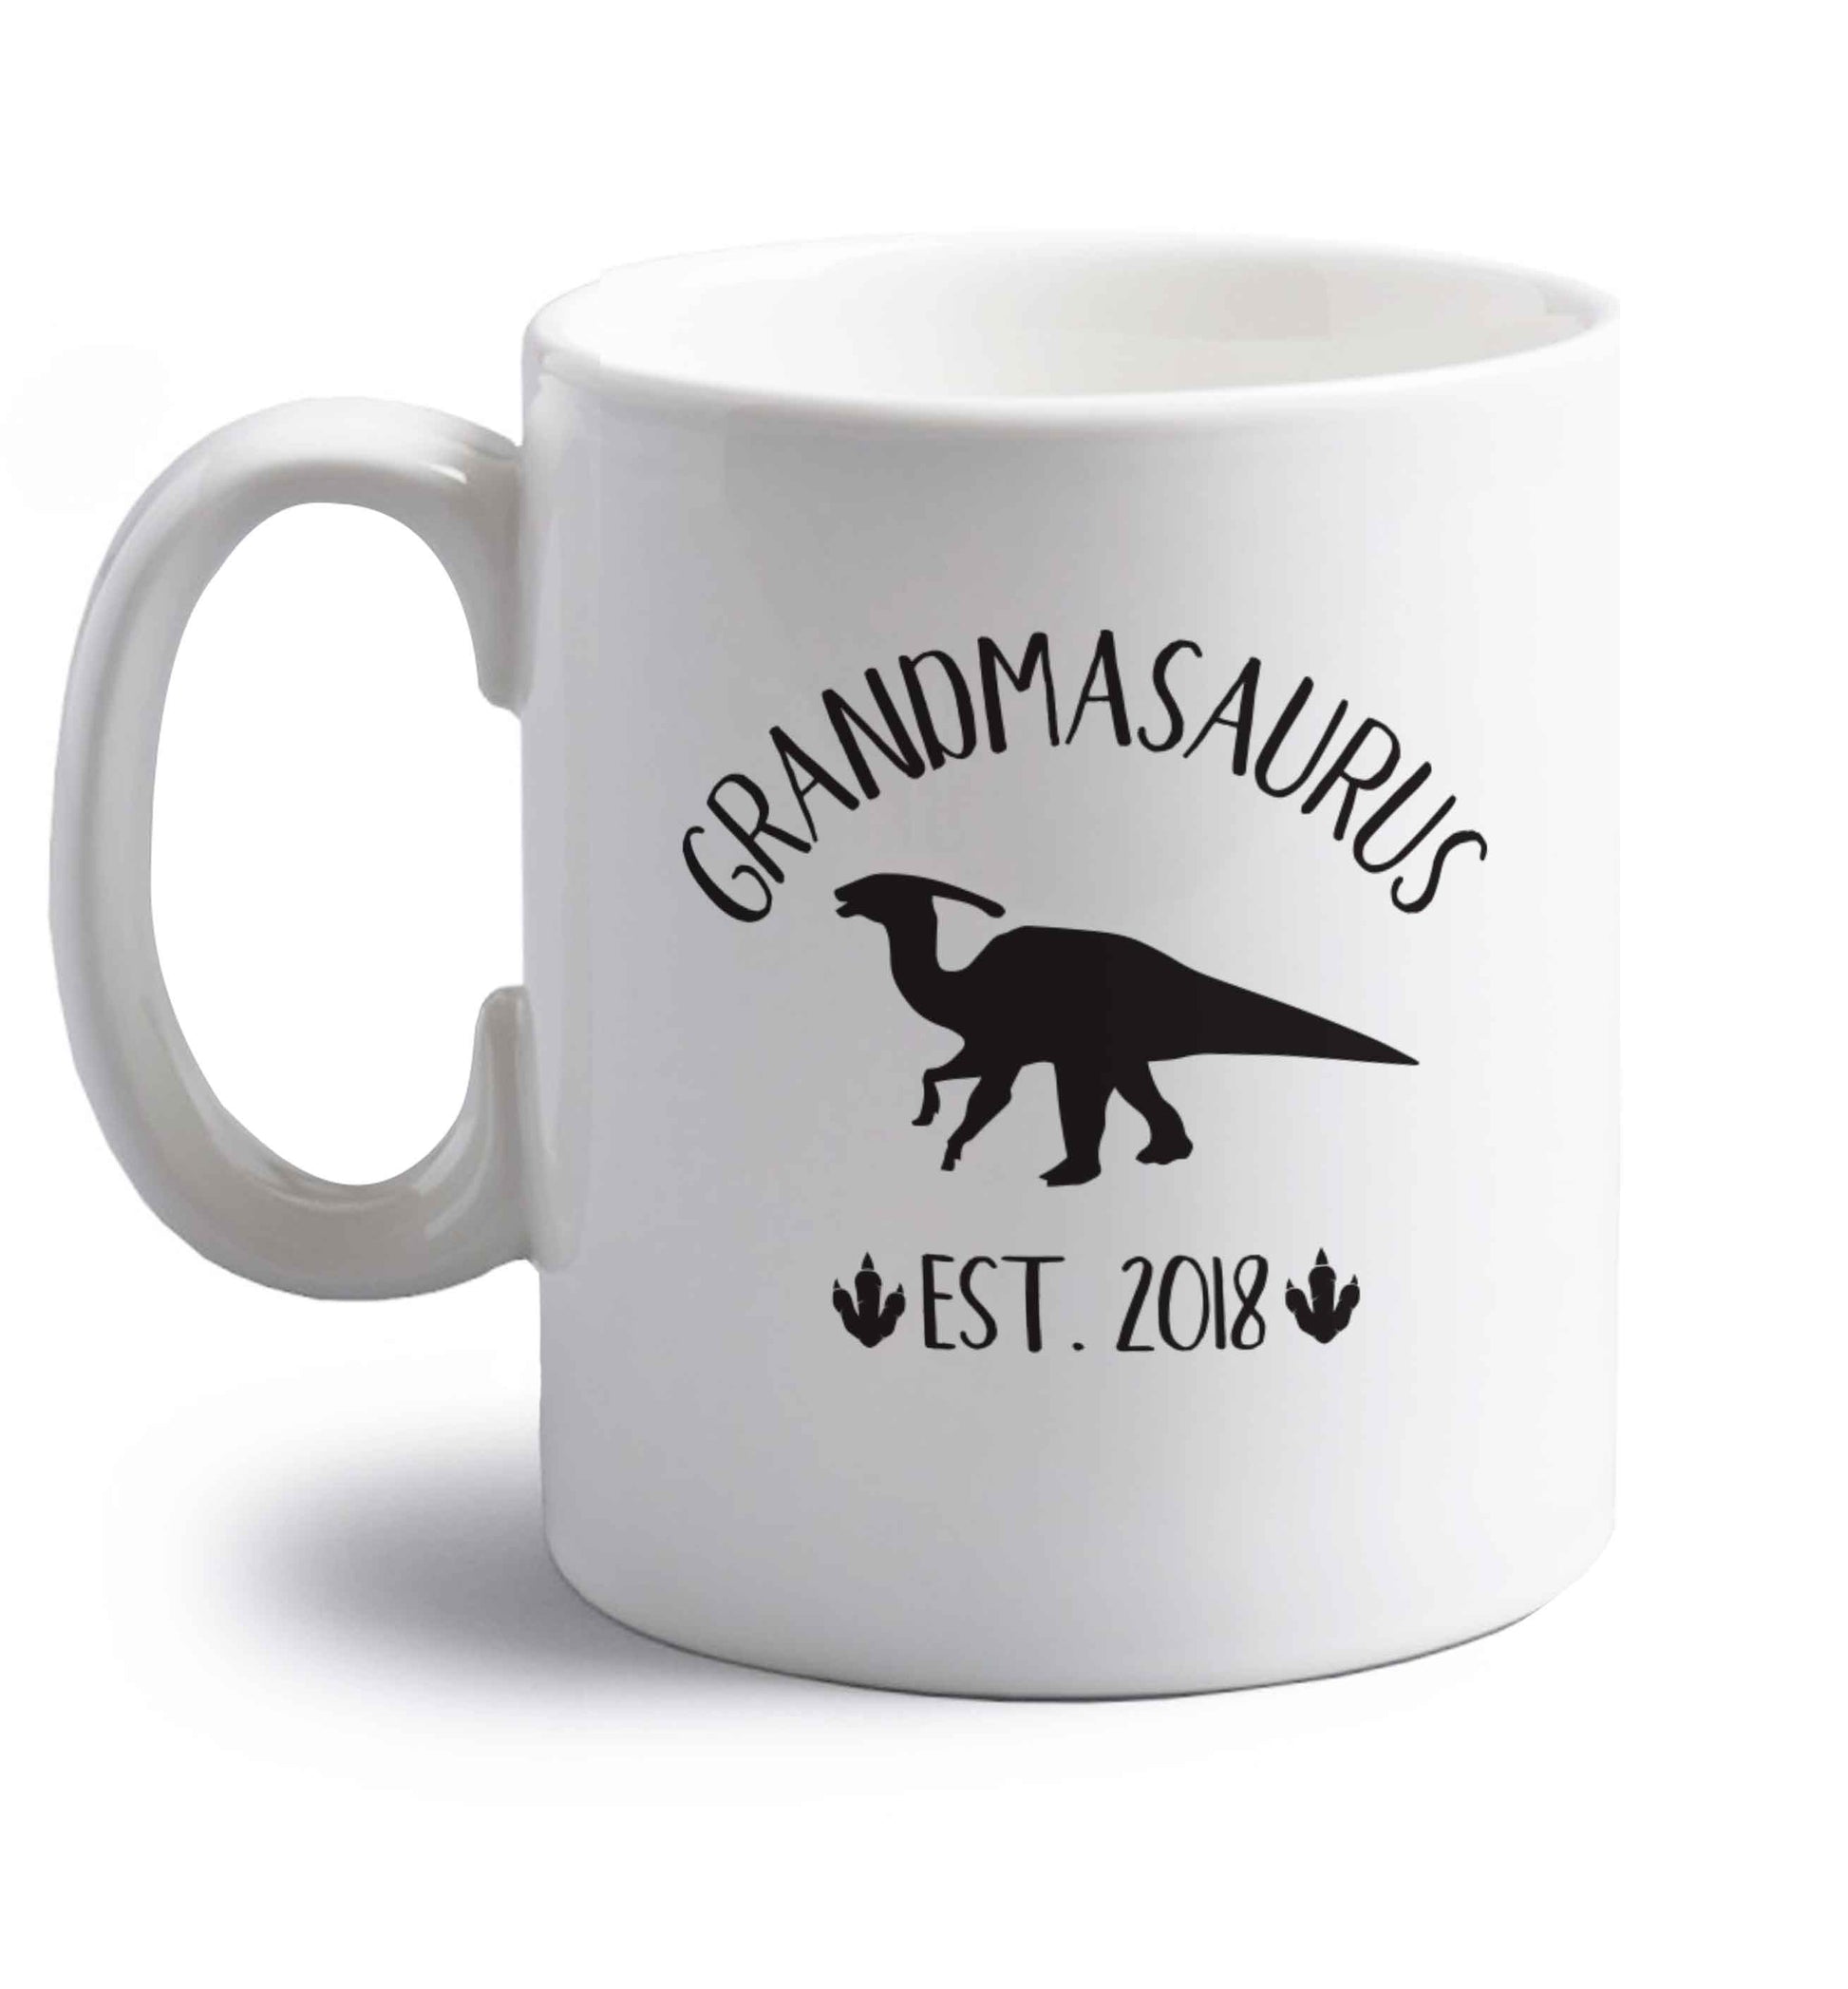 Personalised grandmasaurus since (custom date) right handed white ceramic mug 